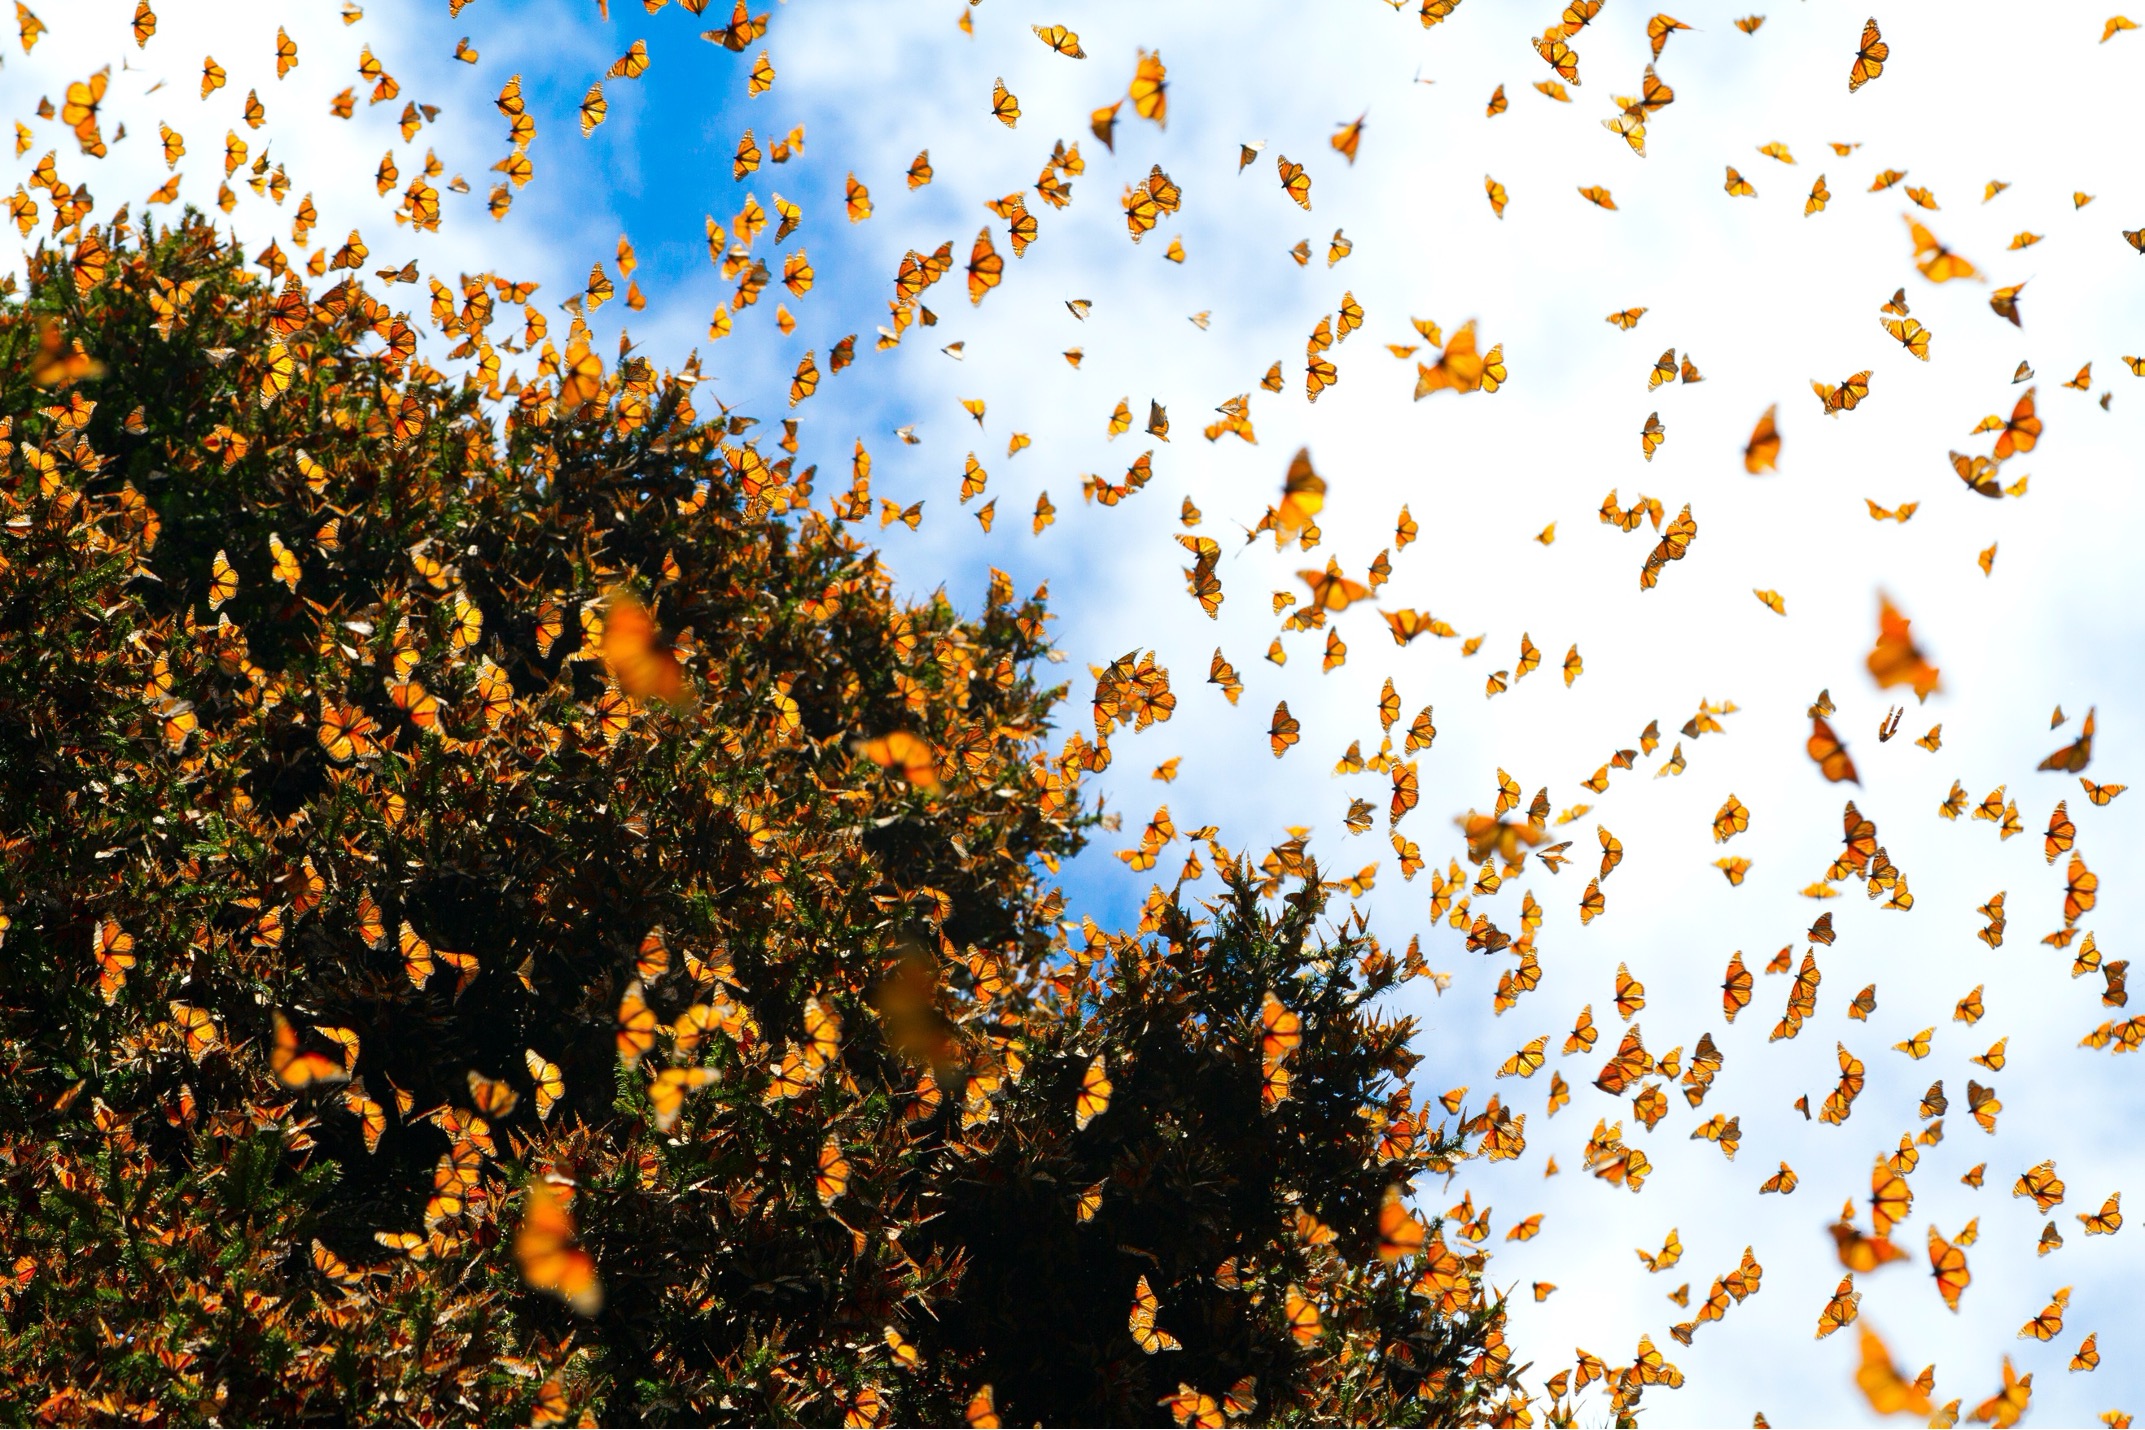 a river of monarch butterflies flies through the air